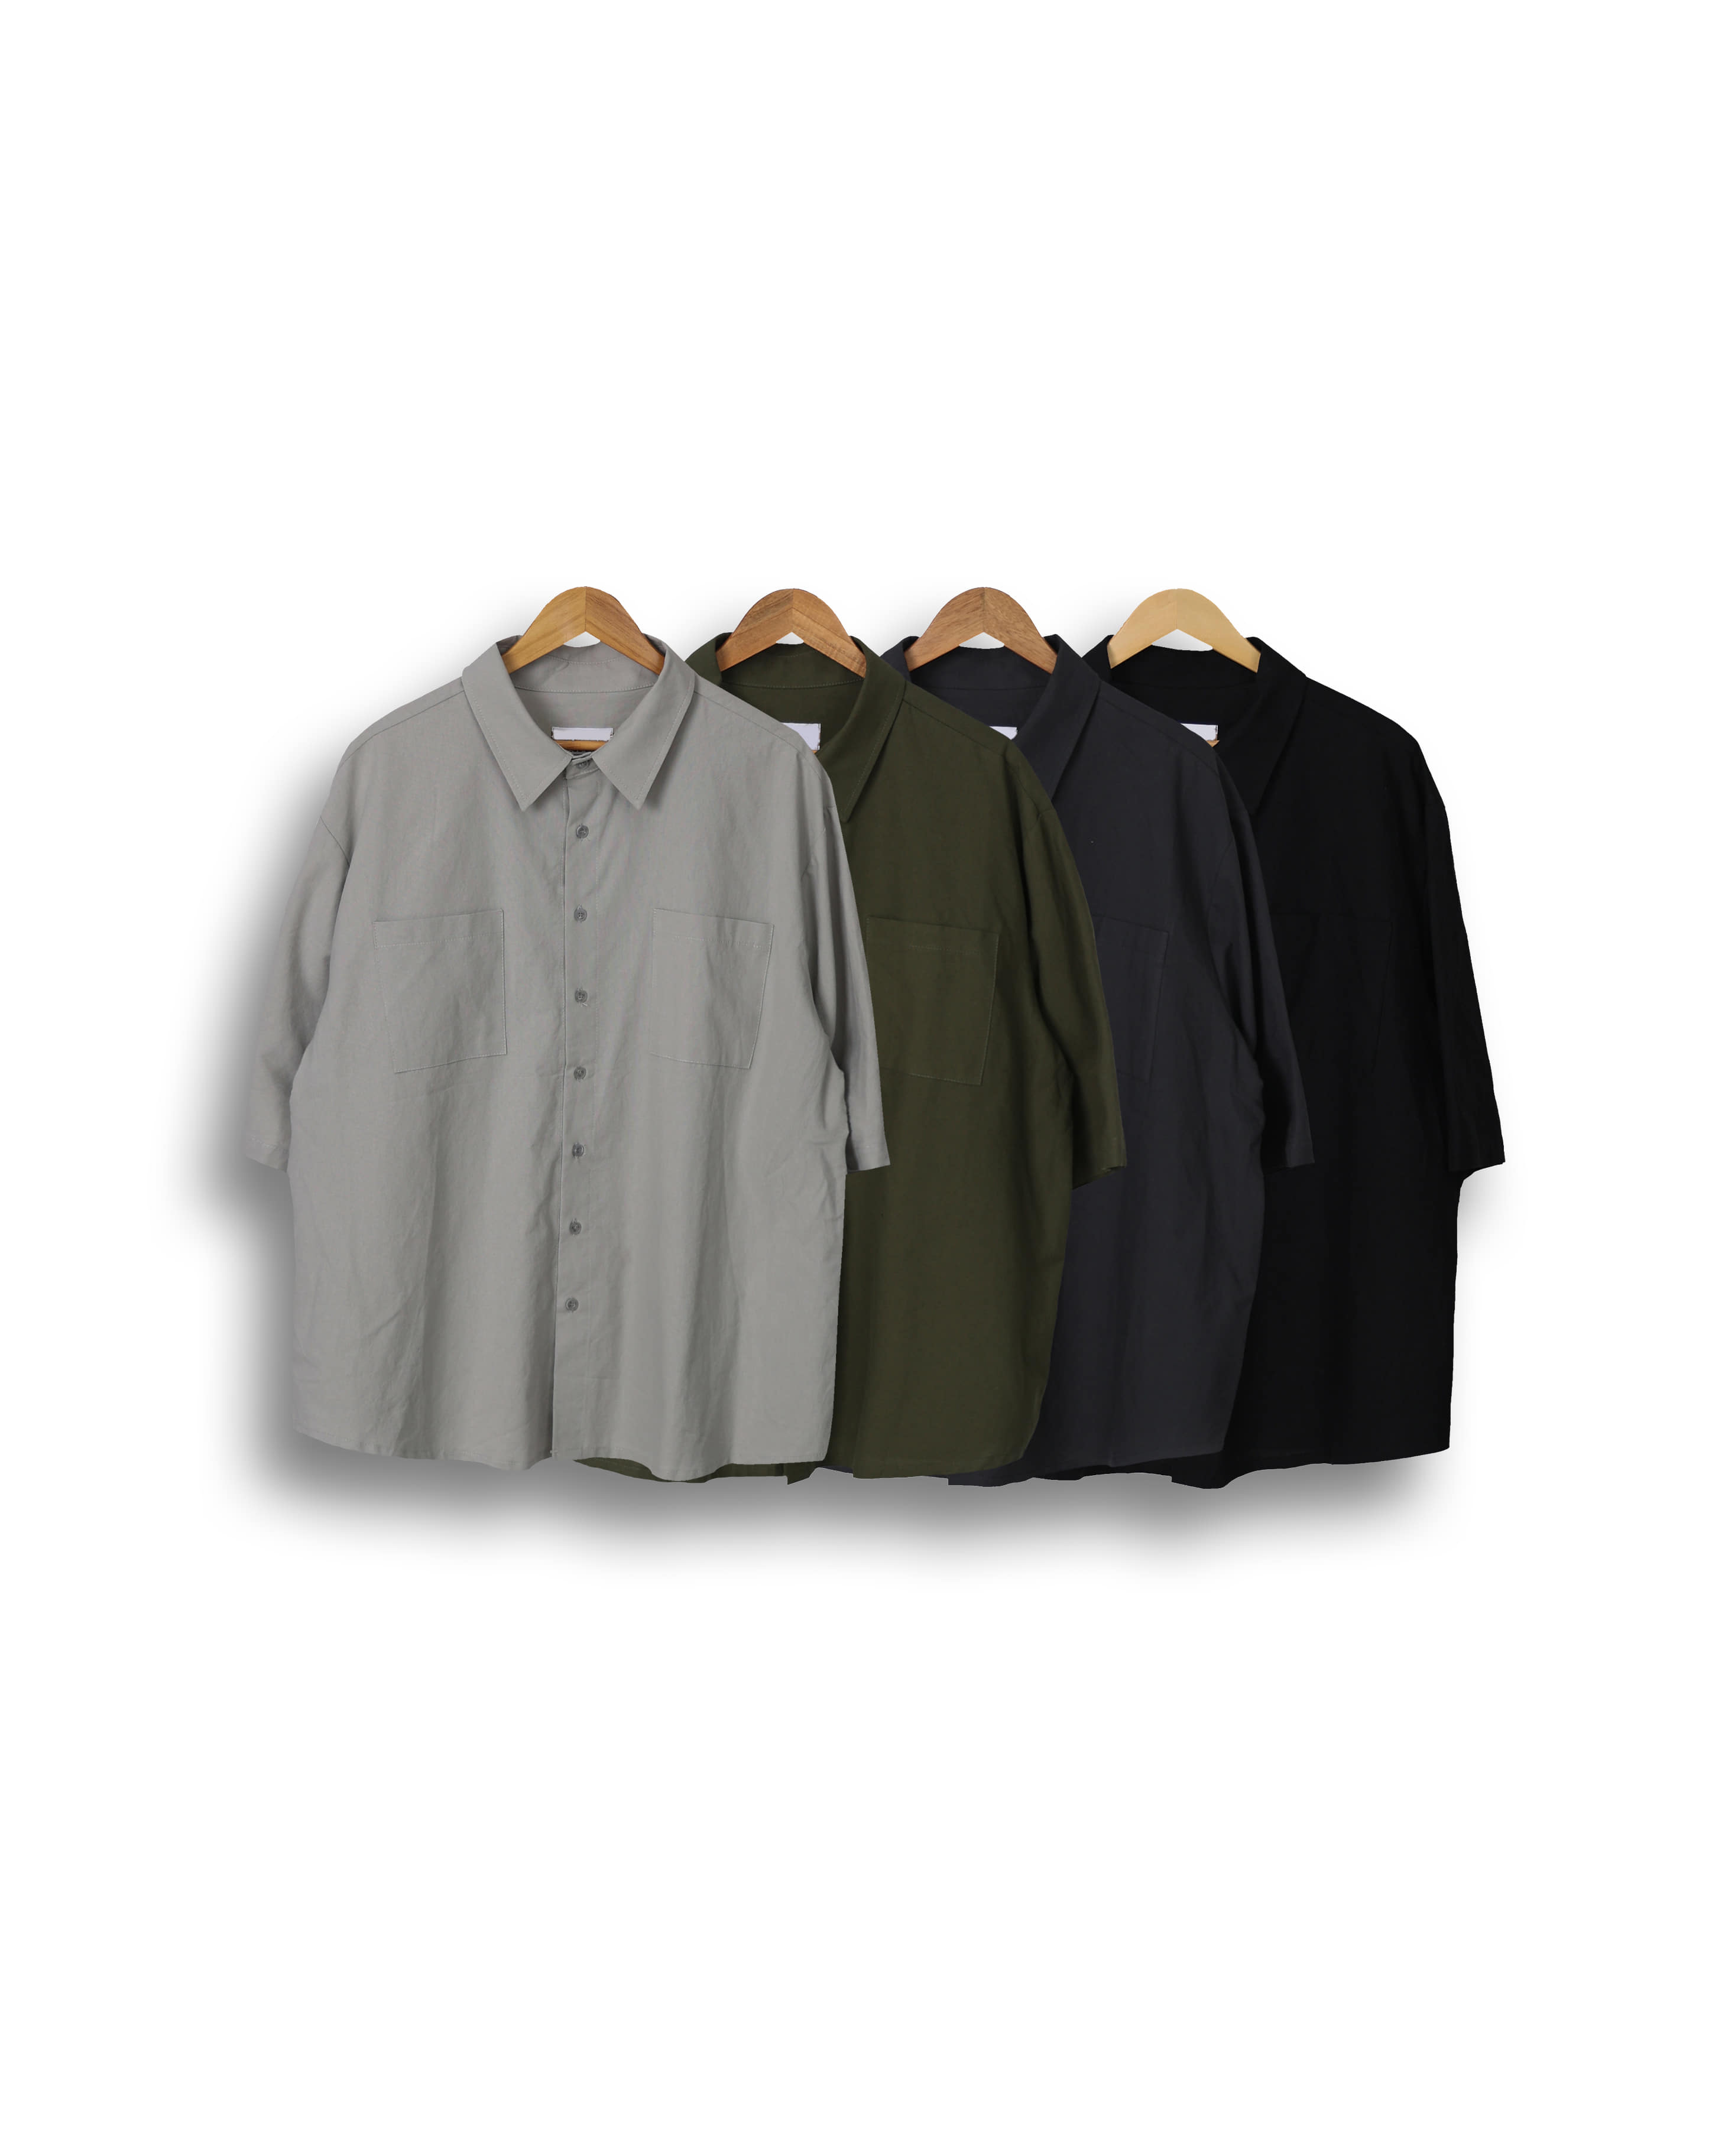 KIRI Bio Washing Two Pocket Half Shirts (Black/Charcoal/Khaki/Gray)